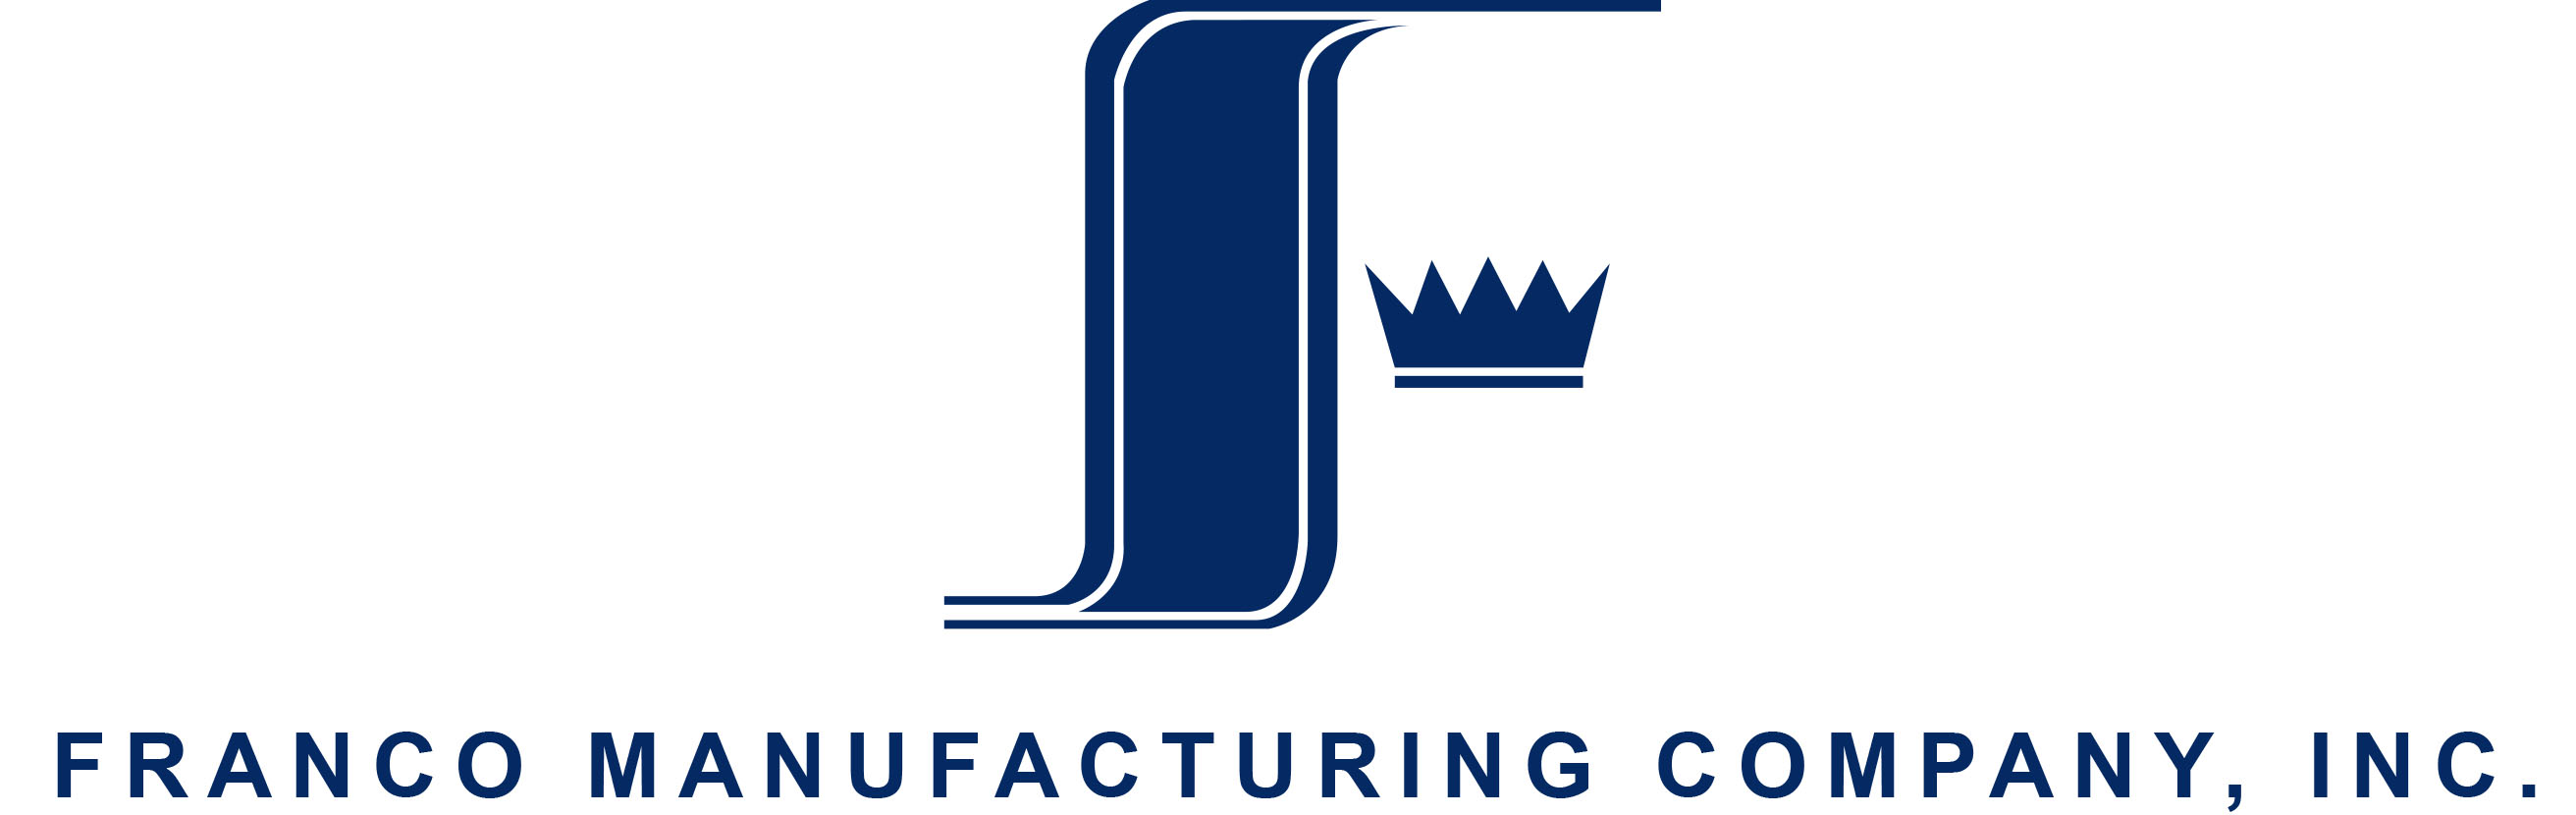 Franco Manufacturing Company, Inc. logo